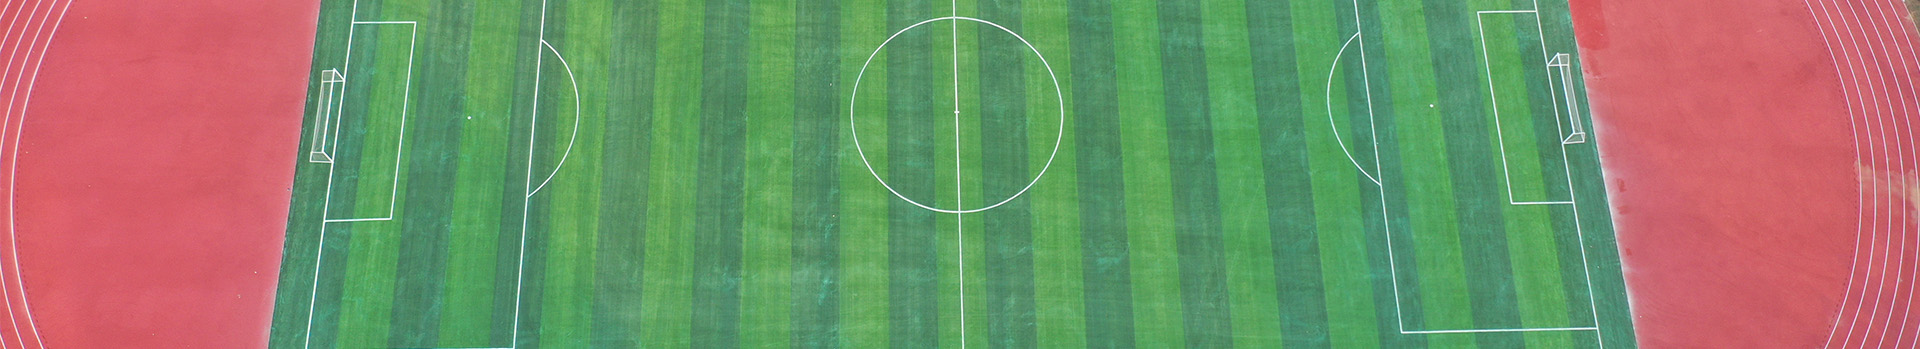 Stadium Grass